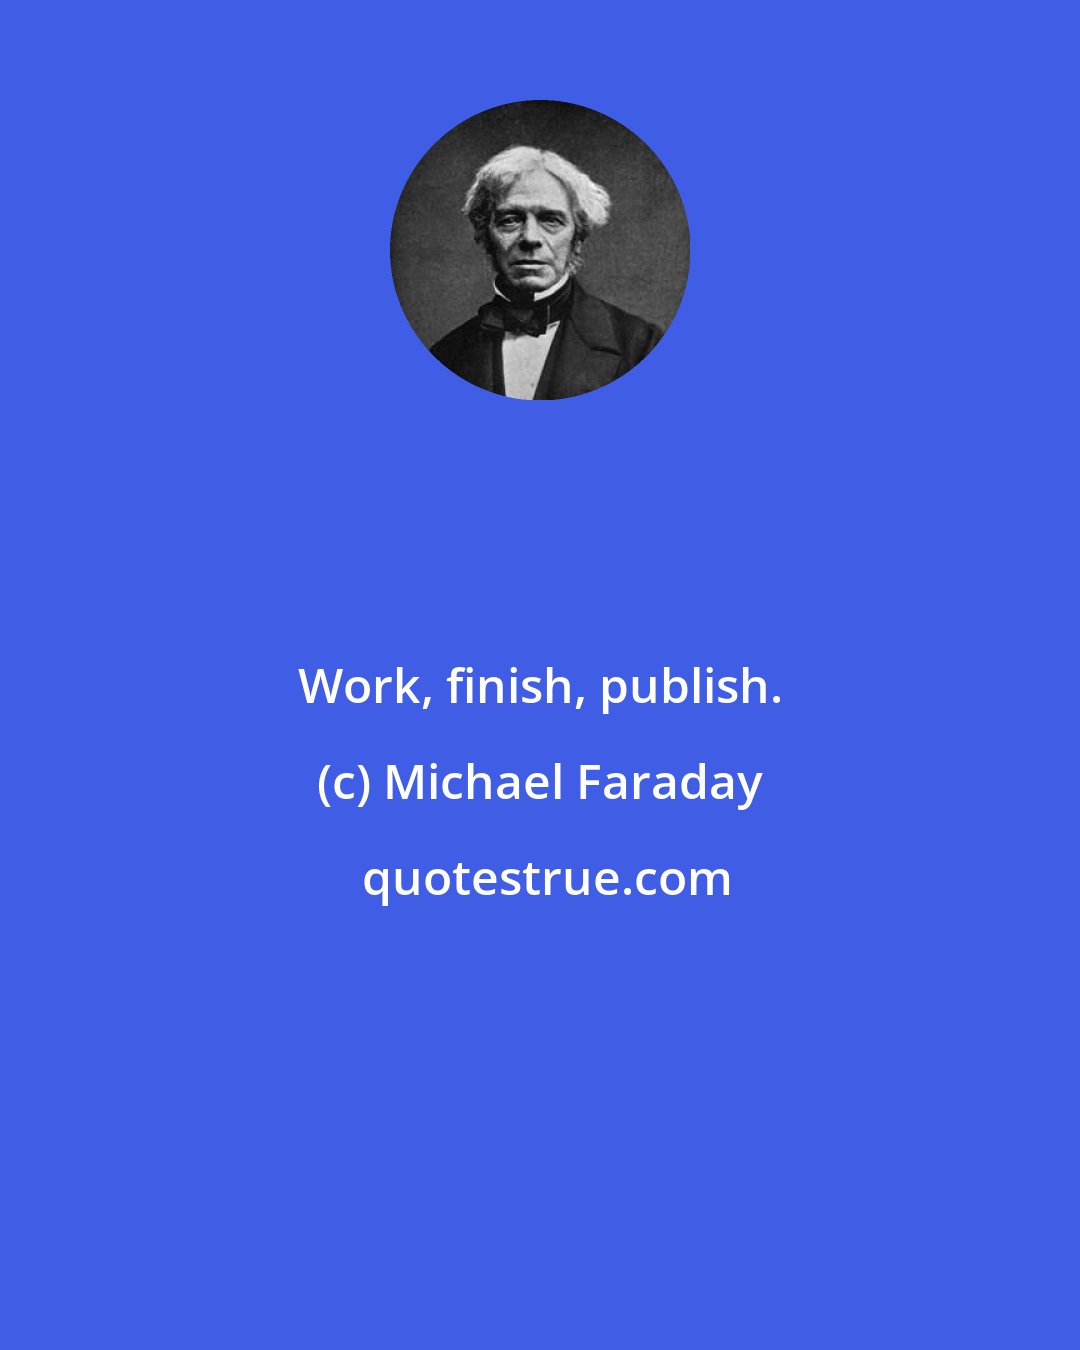 Michael Faraday: Work, finish, publish.